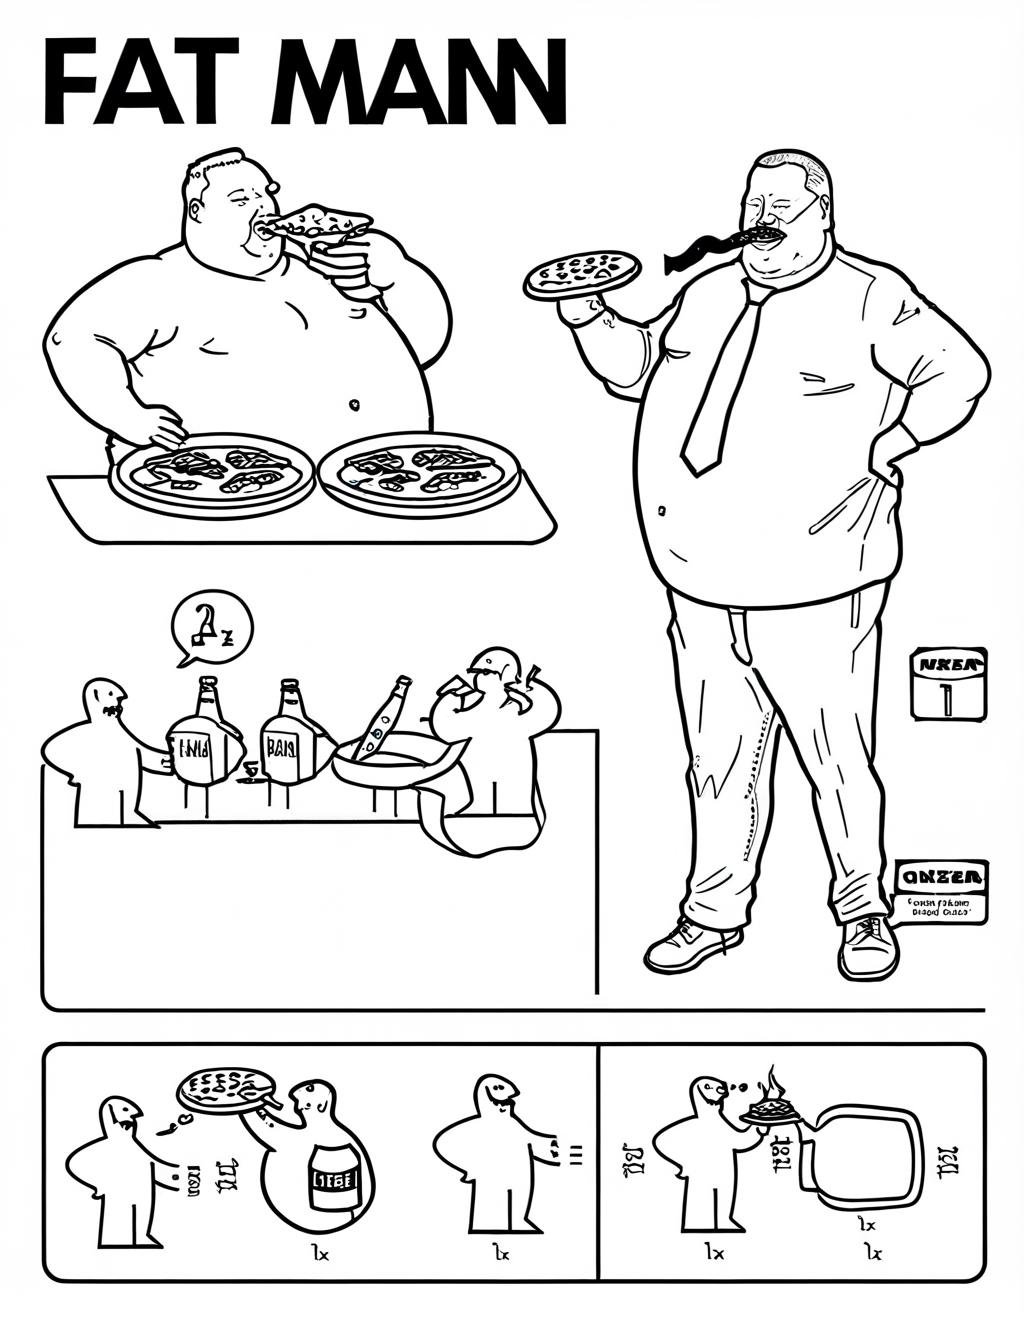 <lora:ikea_instructions_xl_v1_5:1> fat man, eat pizza, eat hamburgers, drink beer